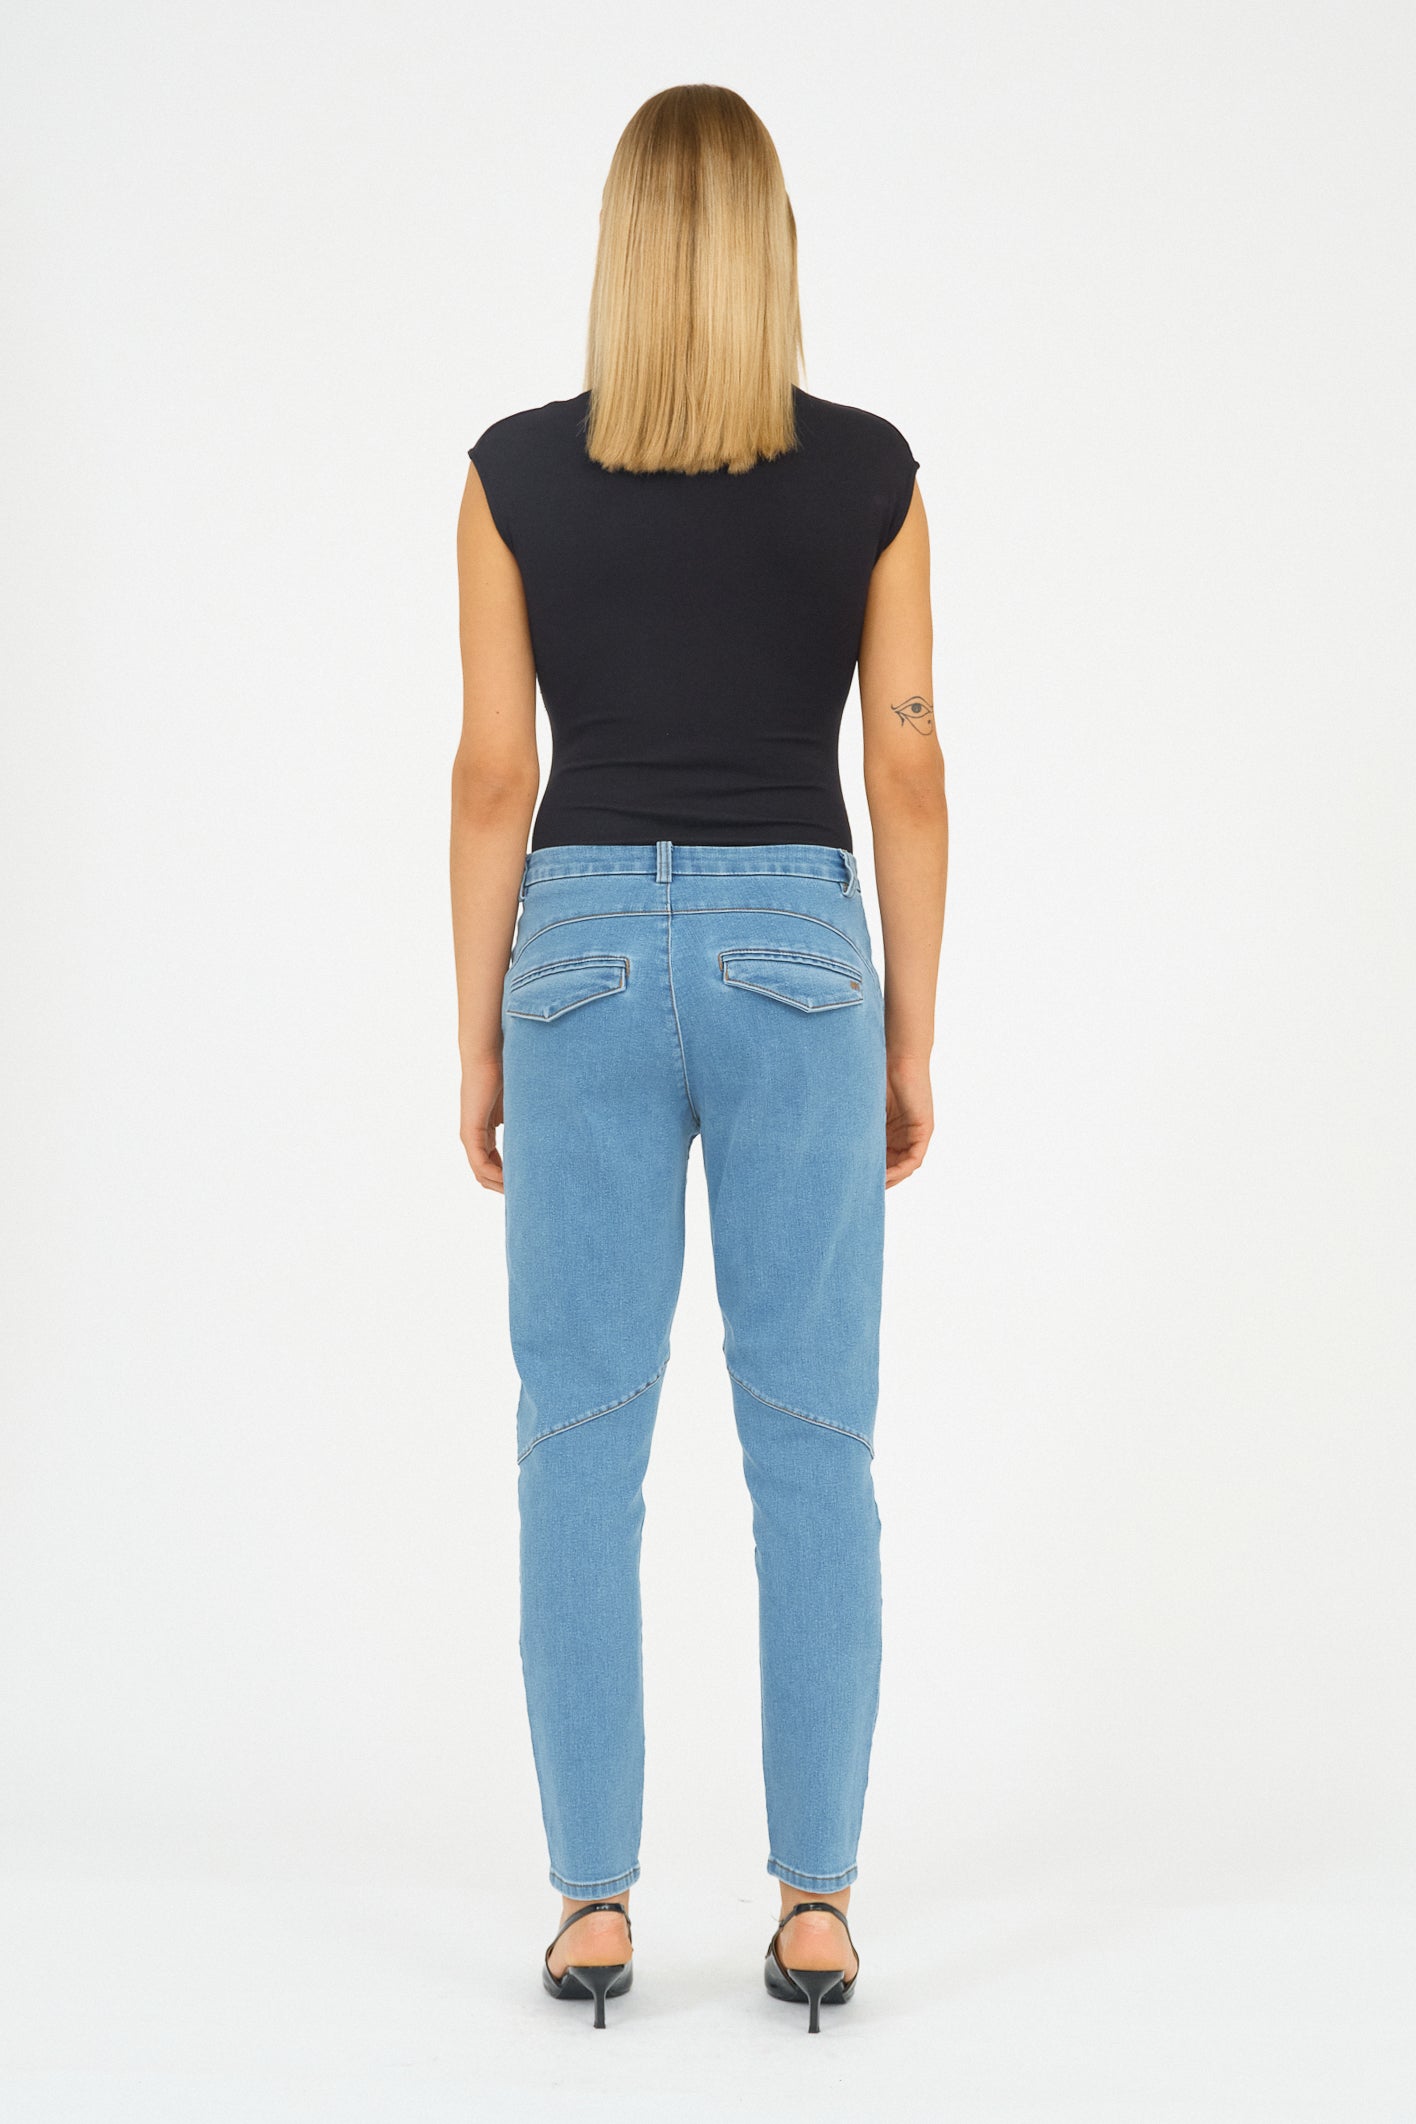 IVY Copenhagen IVY-Karmey Jeans Wash Cool Denim Jeans & Pants 51 Denim Blue